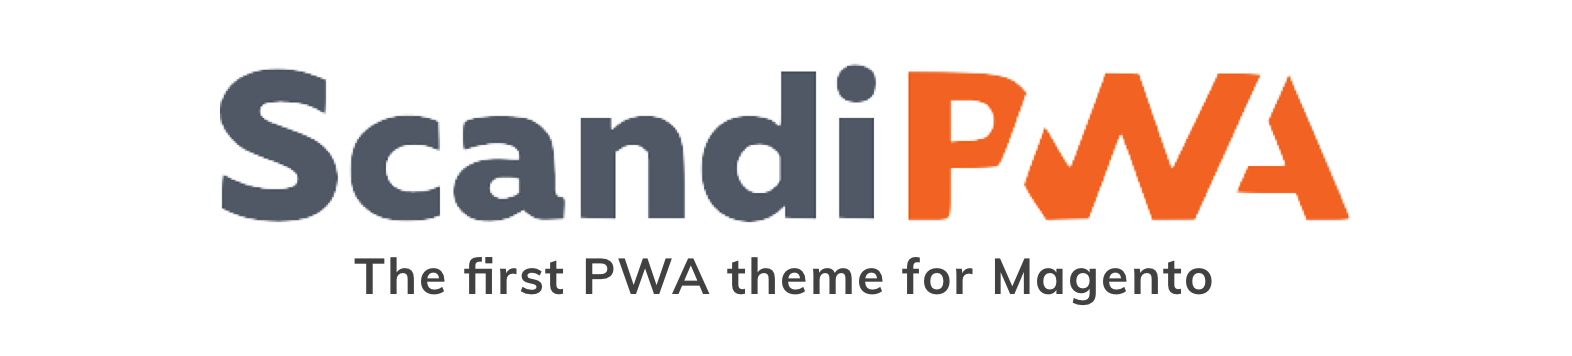 ScandiPWA_logo